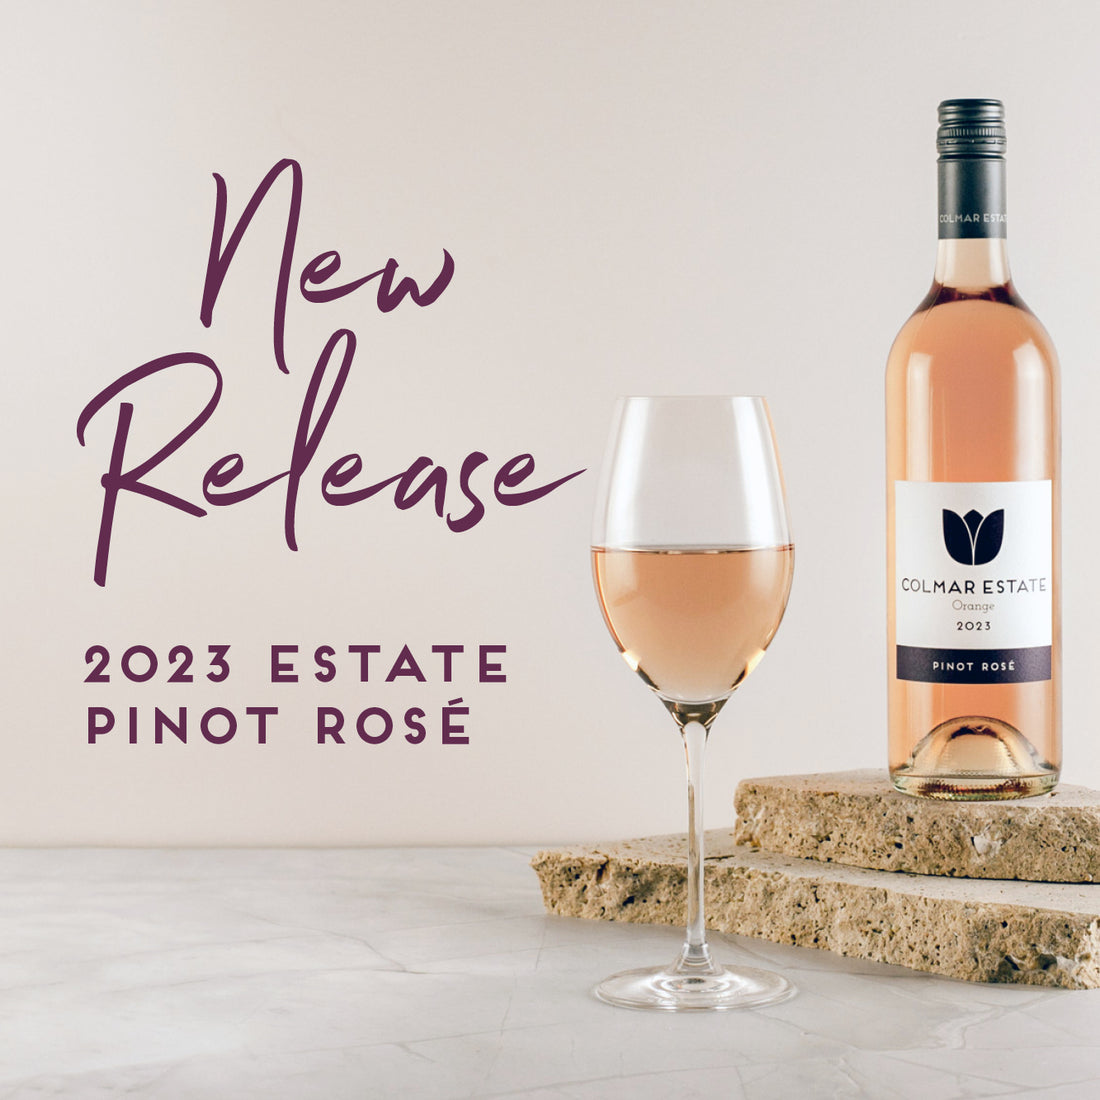 2023 Estate Pinot Rosé